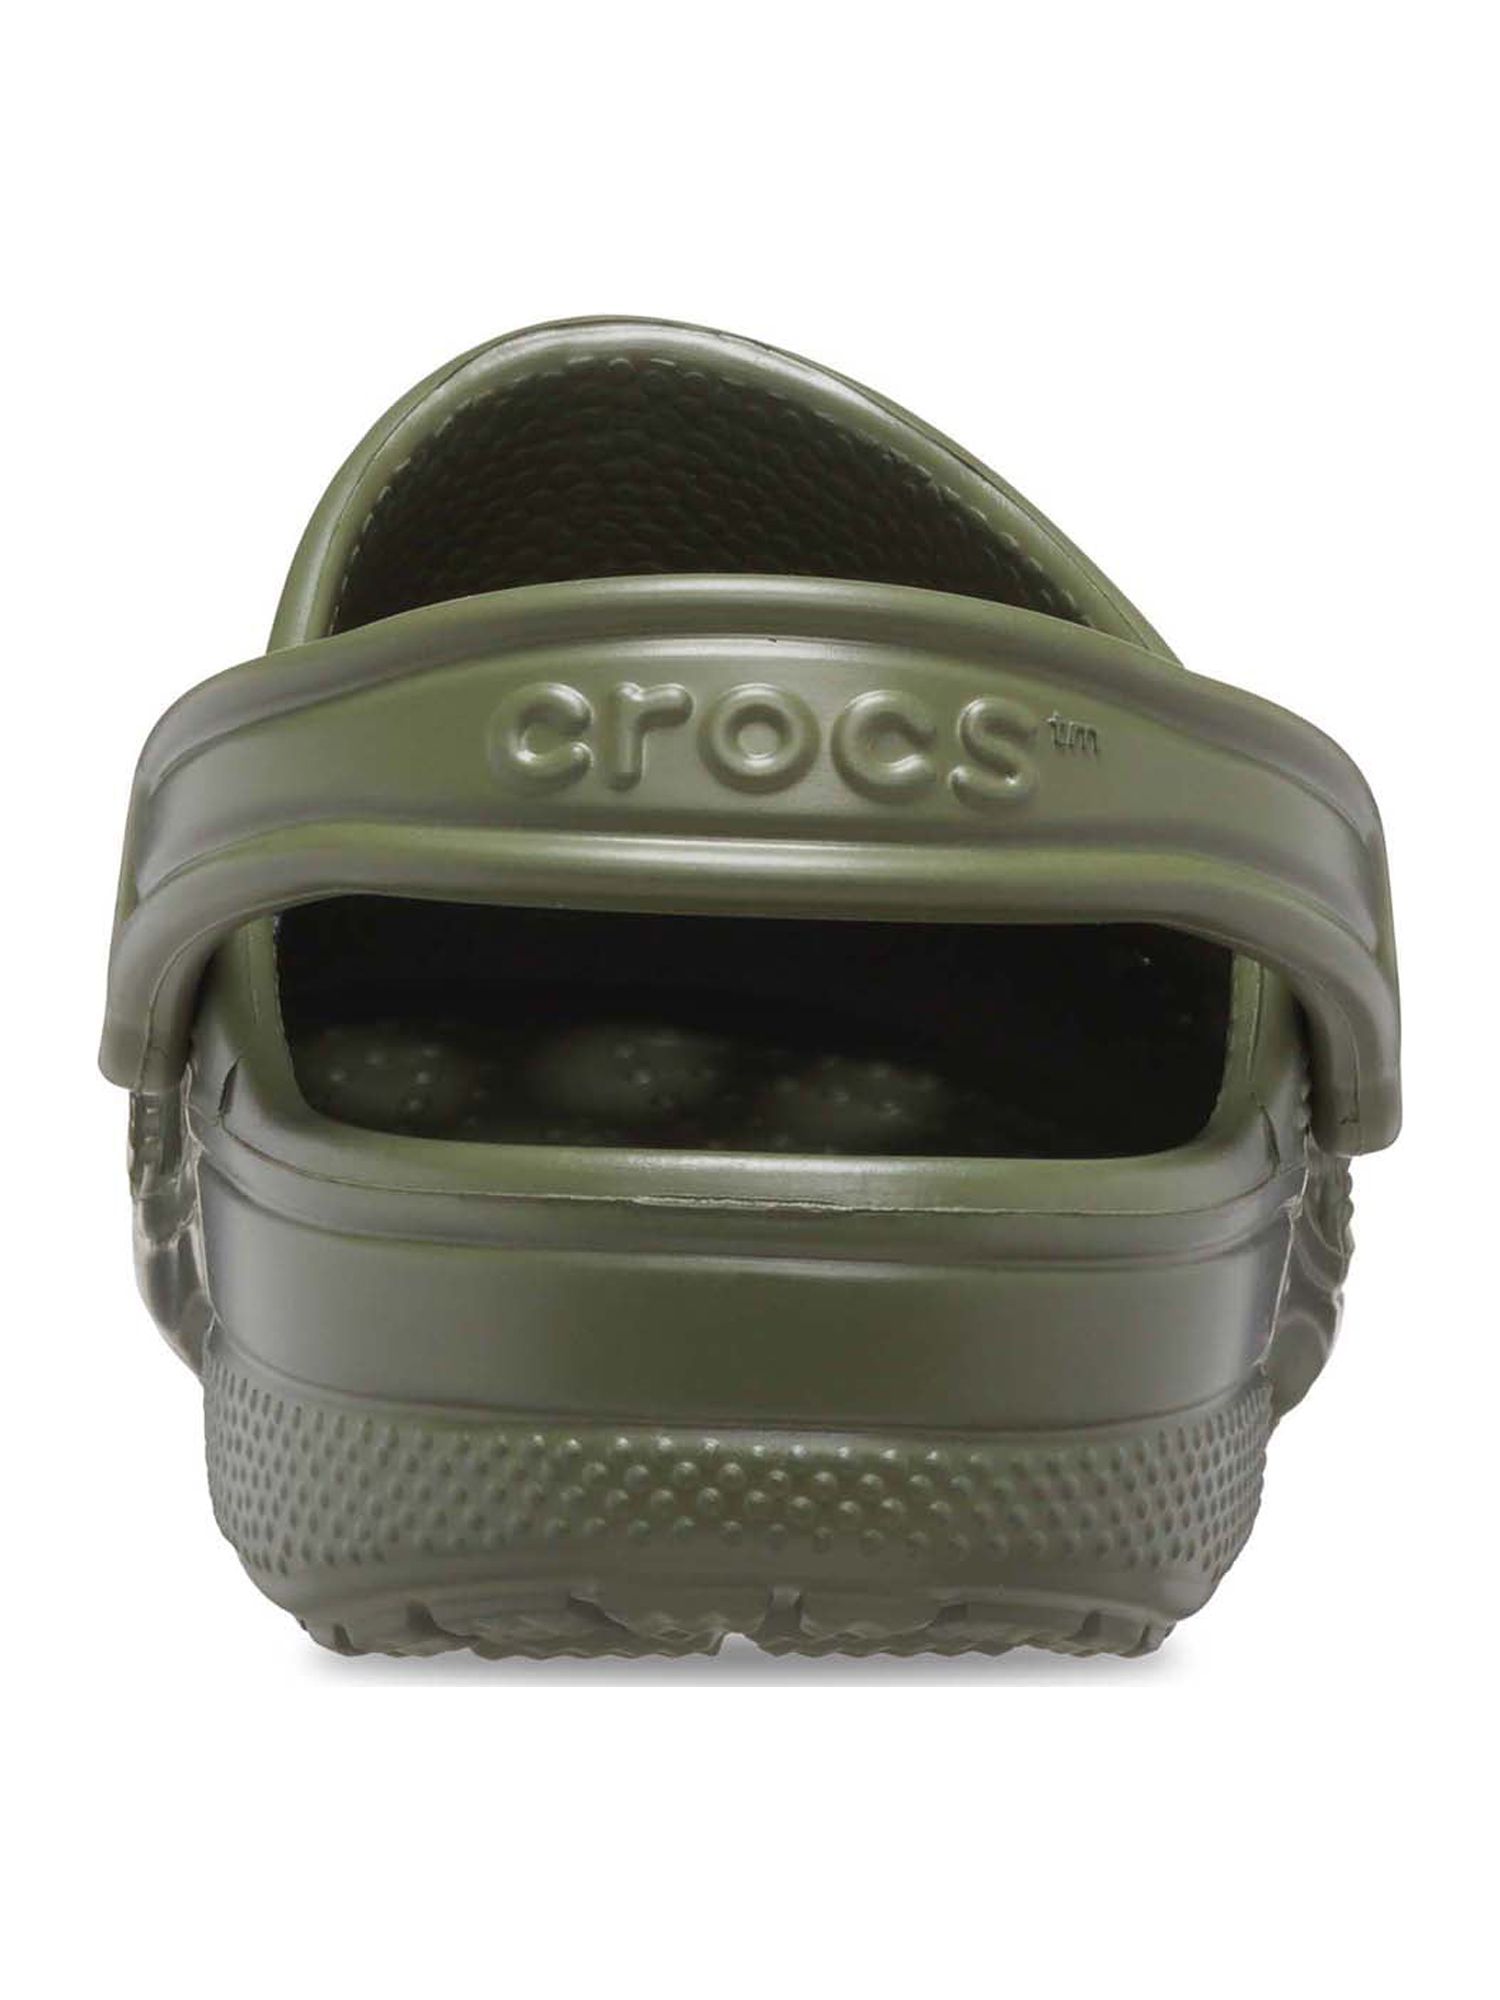 Crocs Men's and Women's Unisex Baya Clog Sandals - image 3 of 7